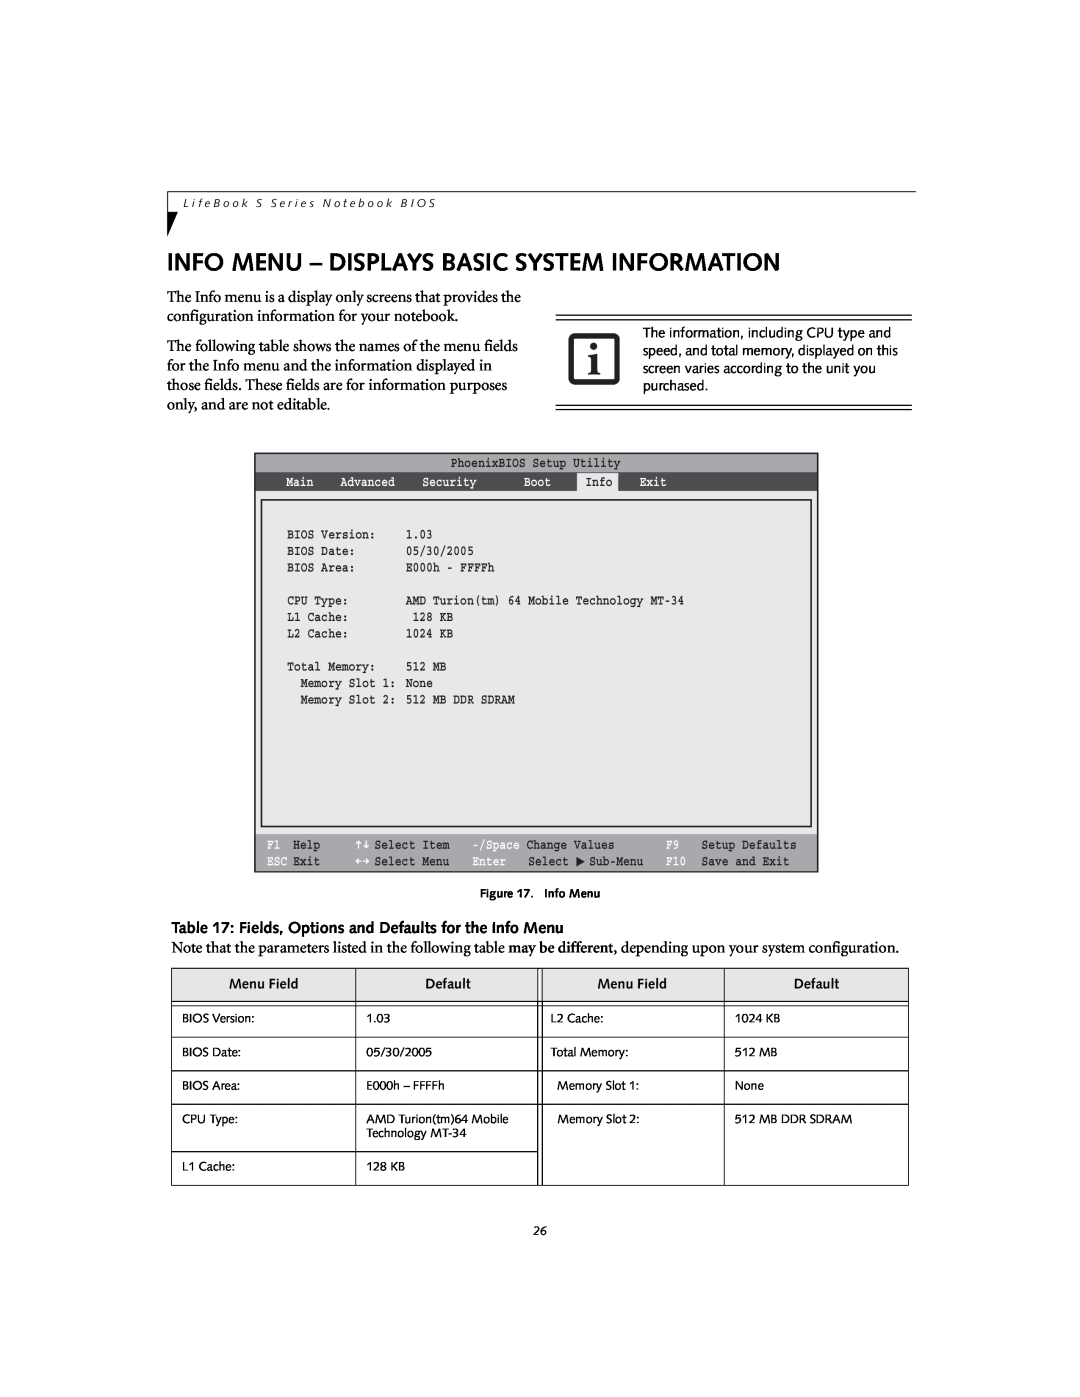 Fujitsu Siemens Computers S2110 manual Info Menu - Displays Basic System Information 